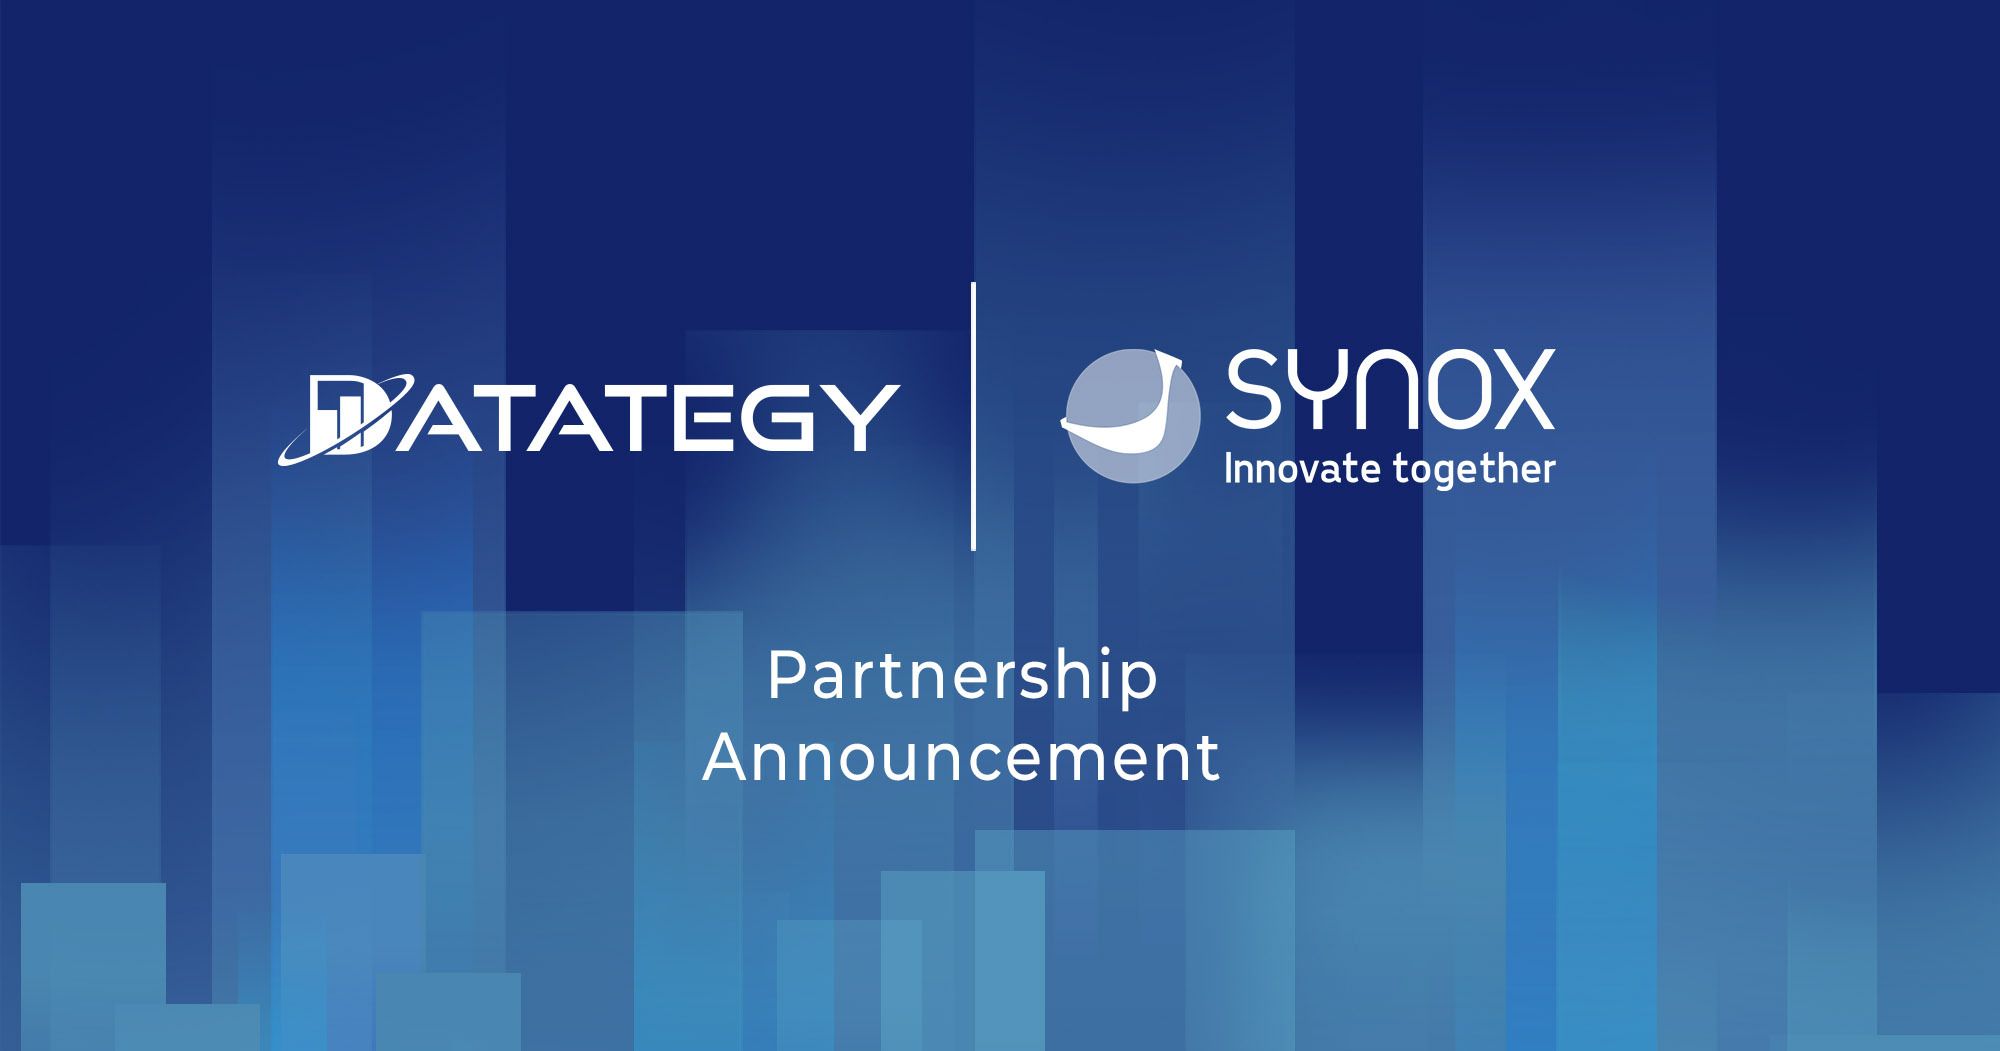 Datategy and Synox announce a strategic partnership